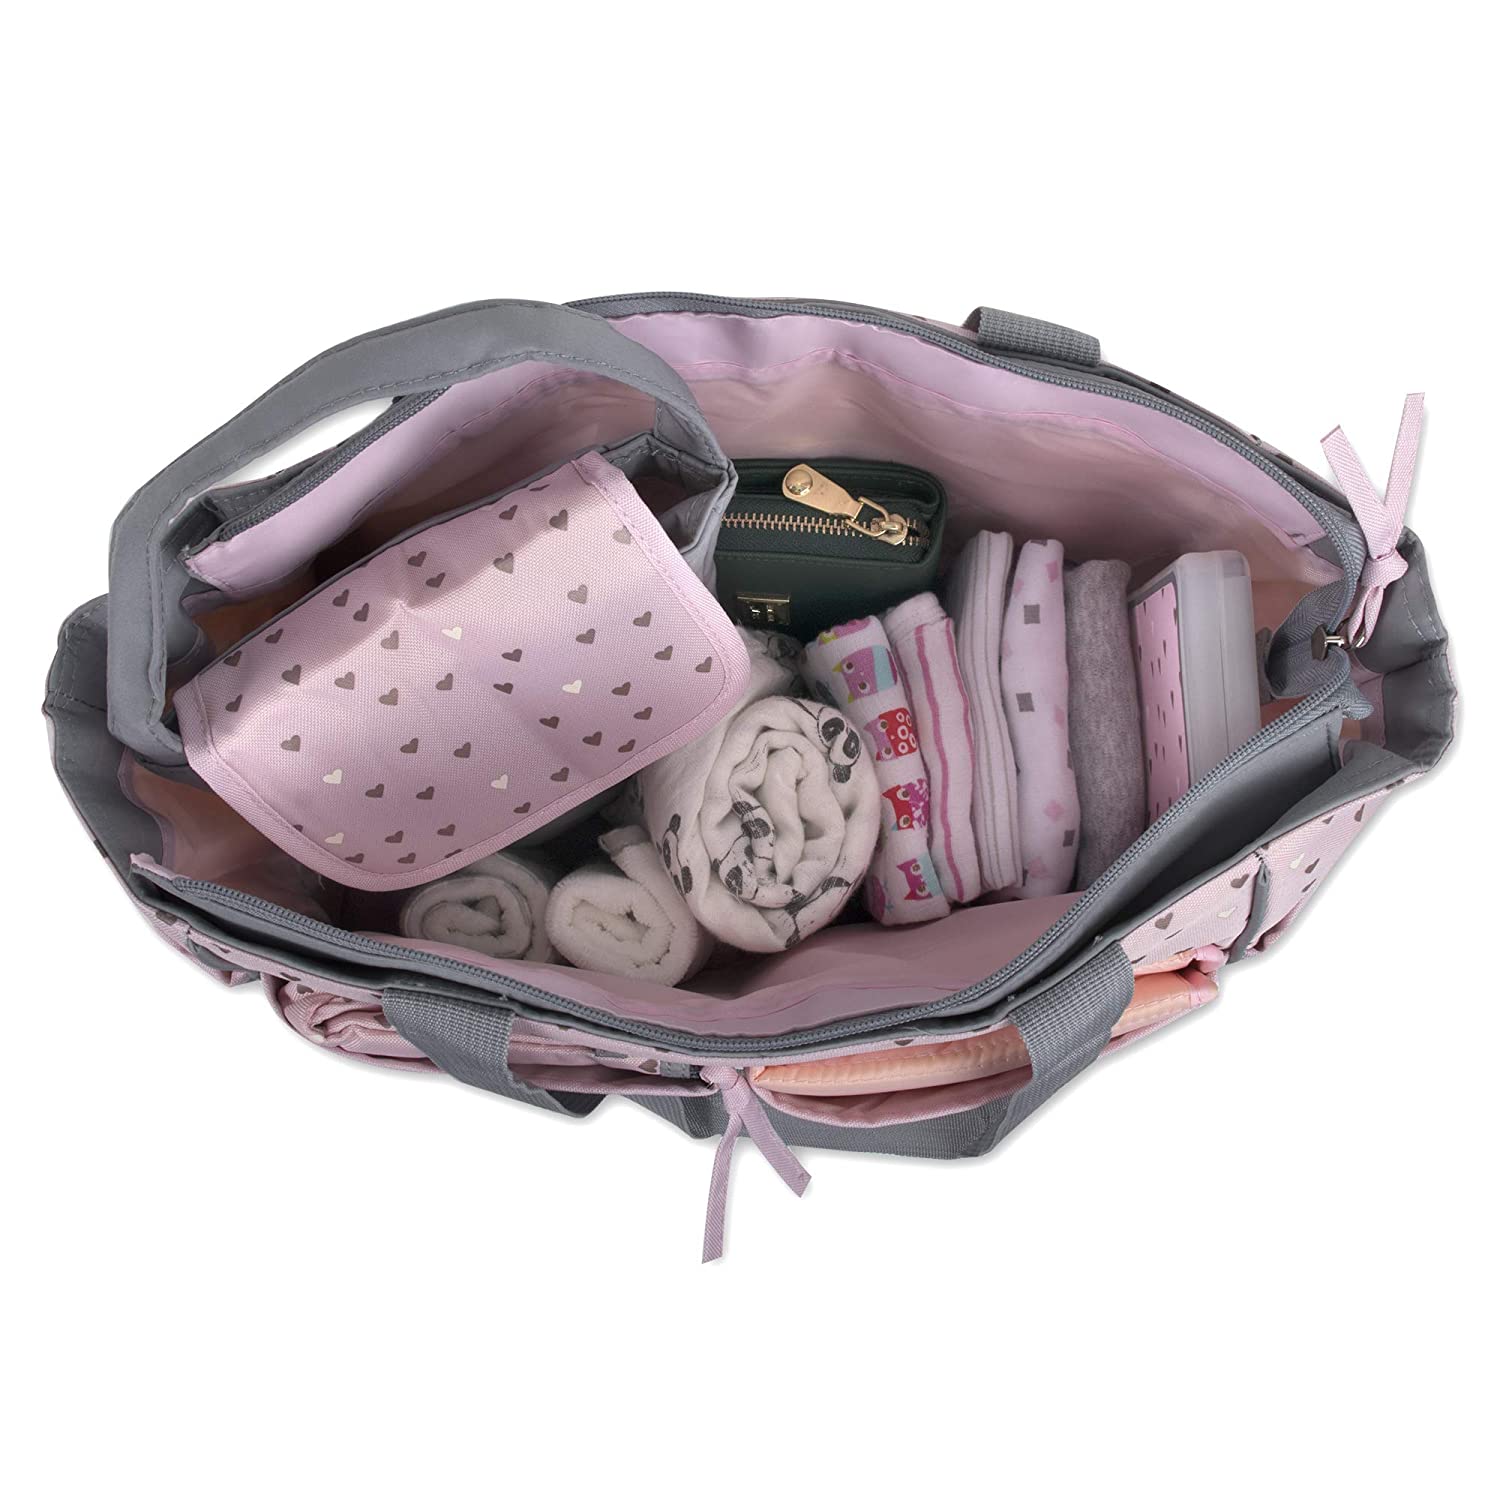 Baby Essentials 5 Piece Diaper Bag Tote Set, Pink Hearts